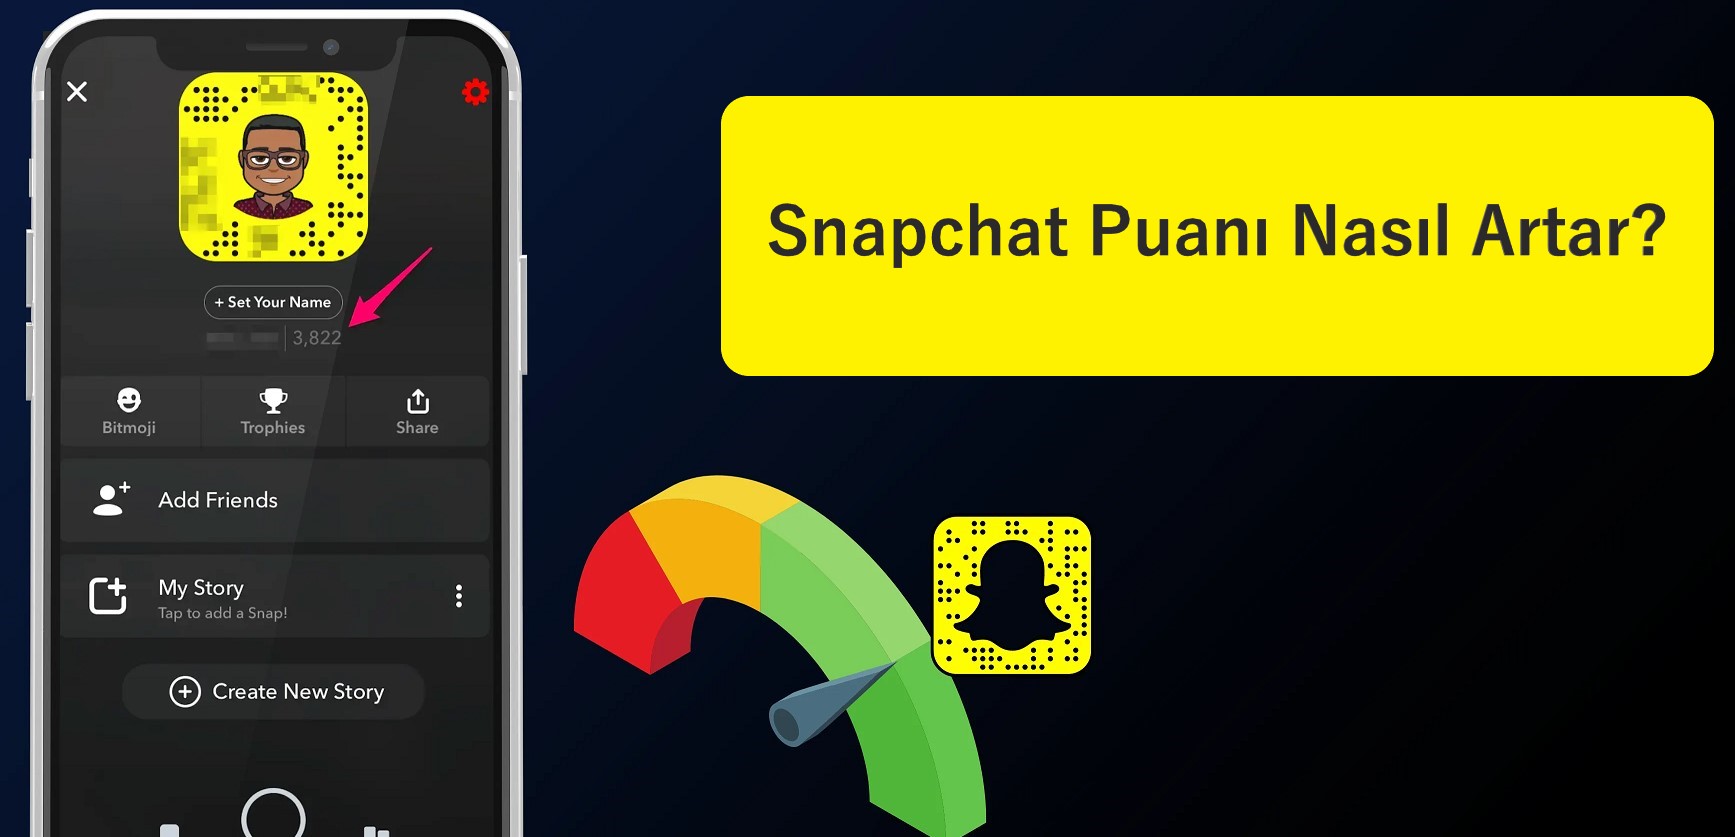 Snapchat Puanı Nasıl Artar?